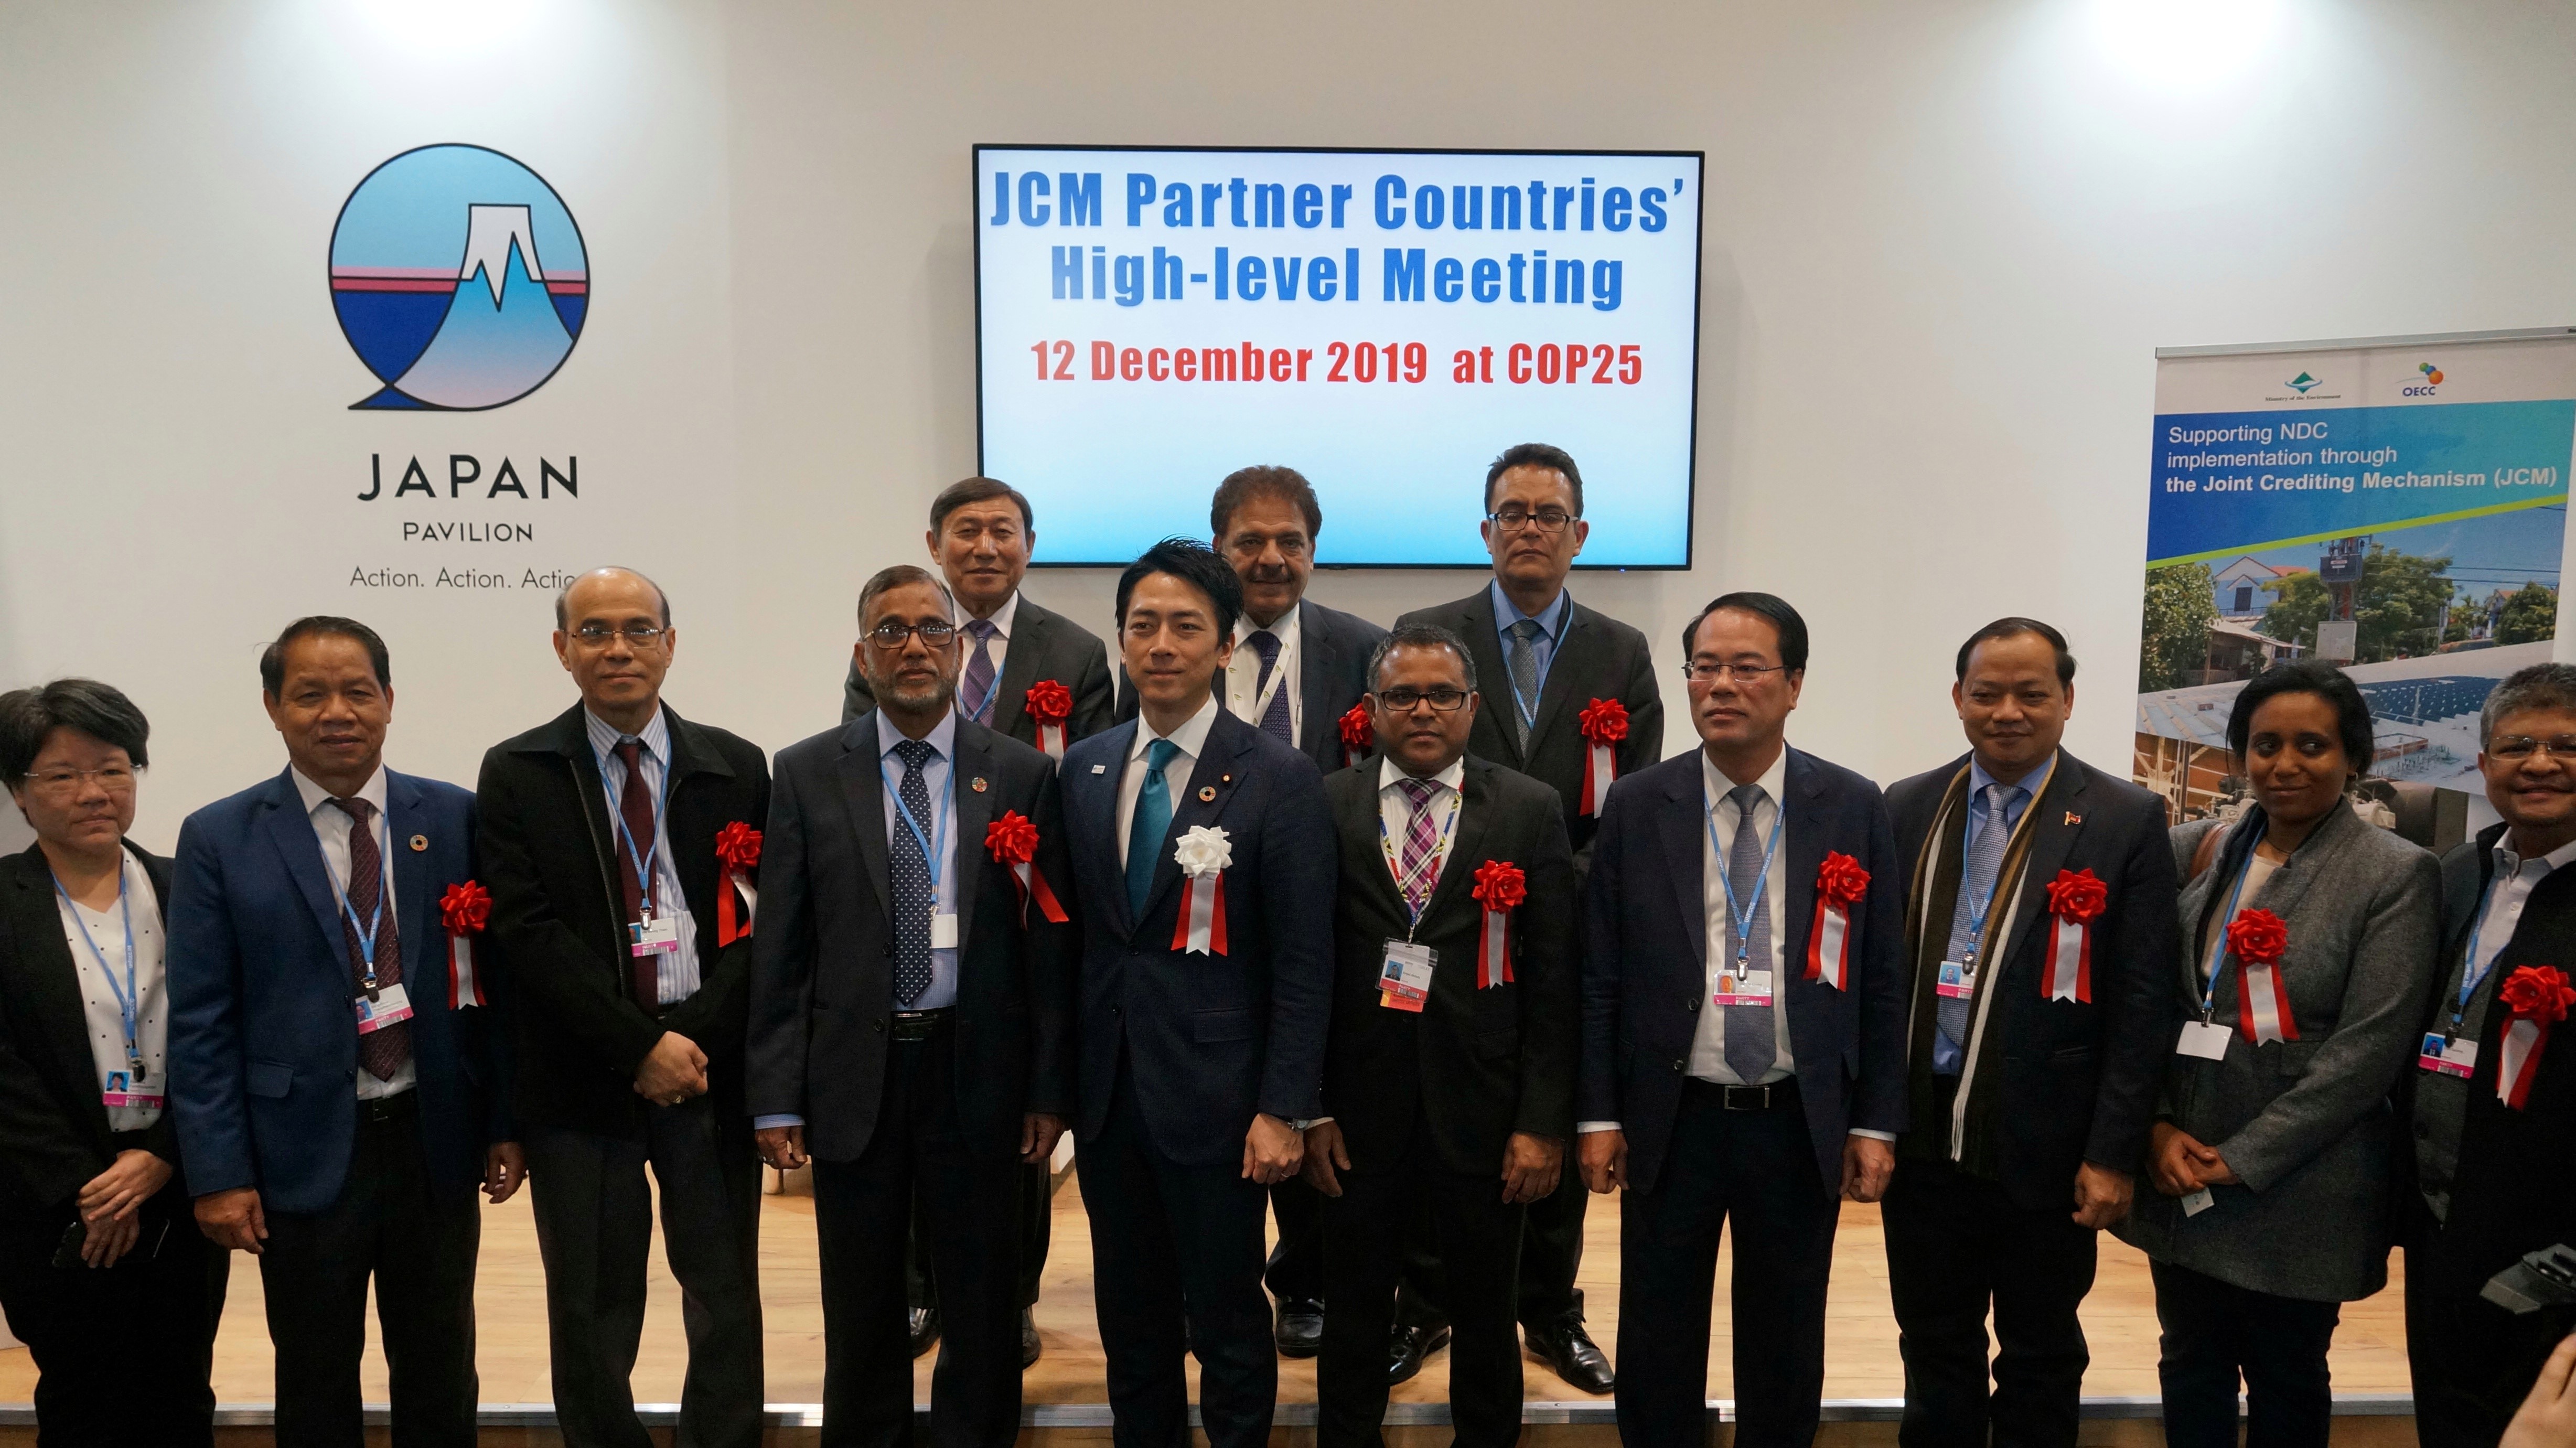 JCM Partner Countries' High-level Meeting